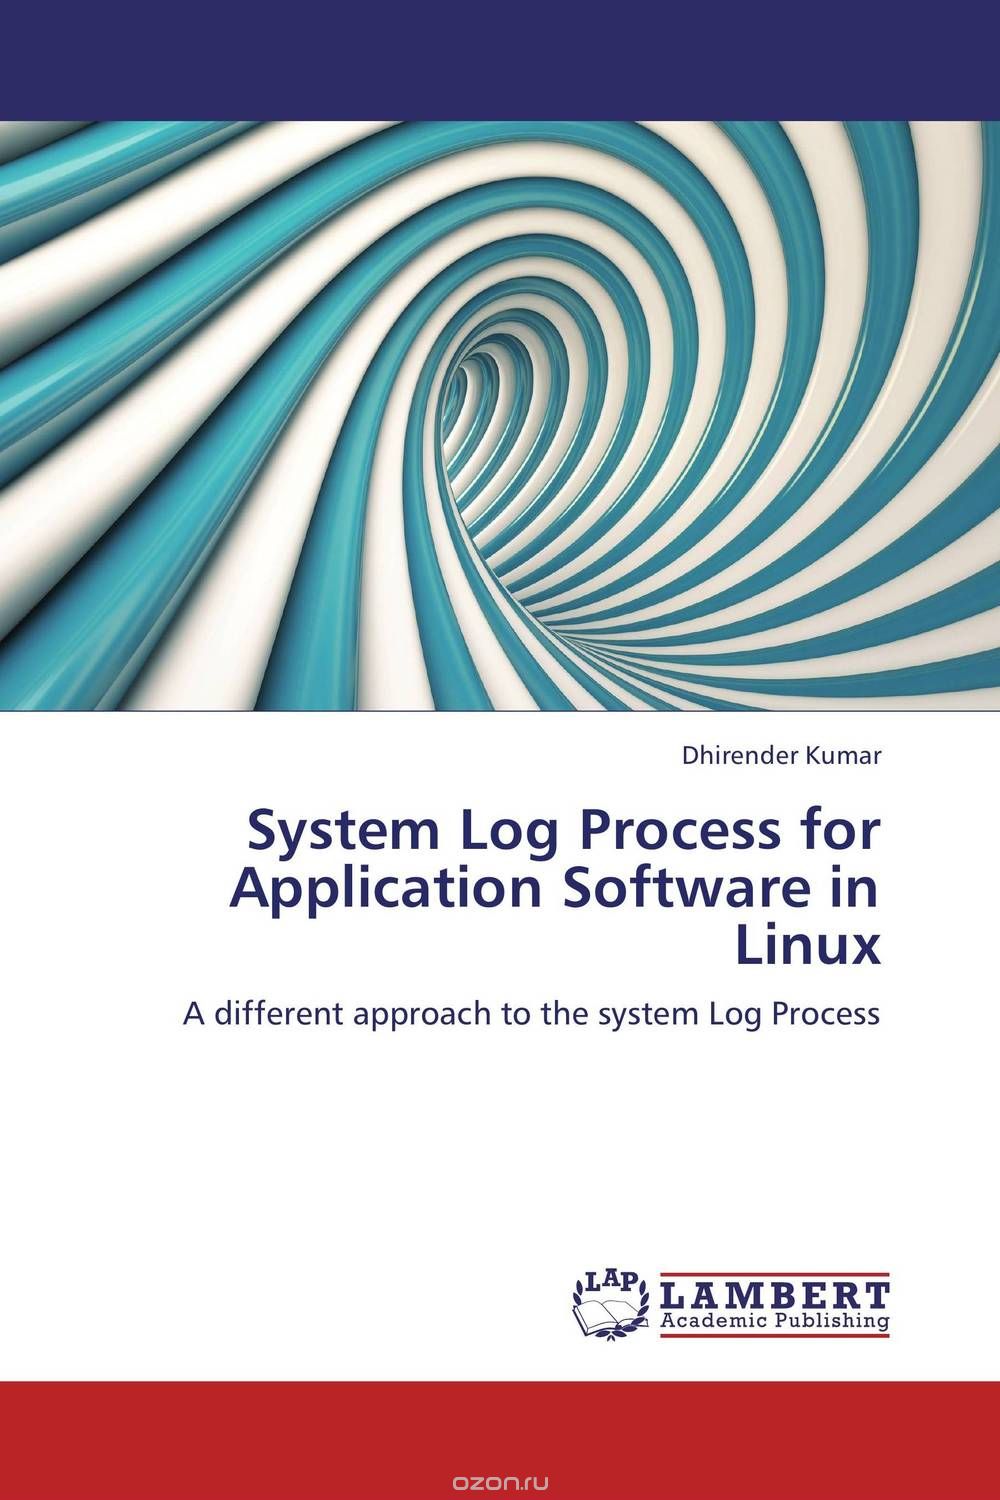 Скачать книгу "System Log Process for Application Software in Linux"